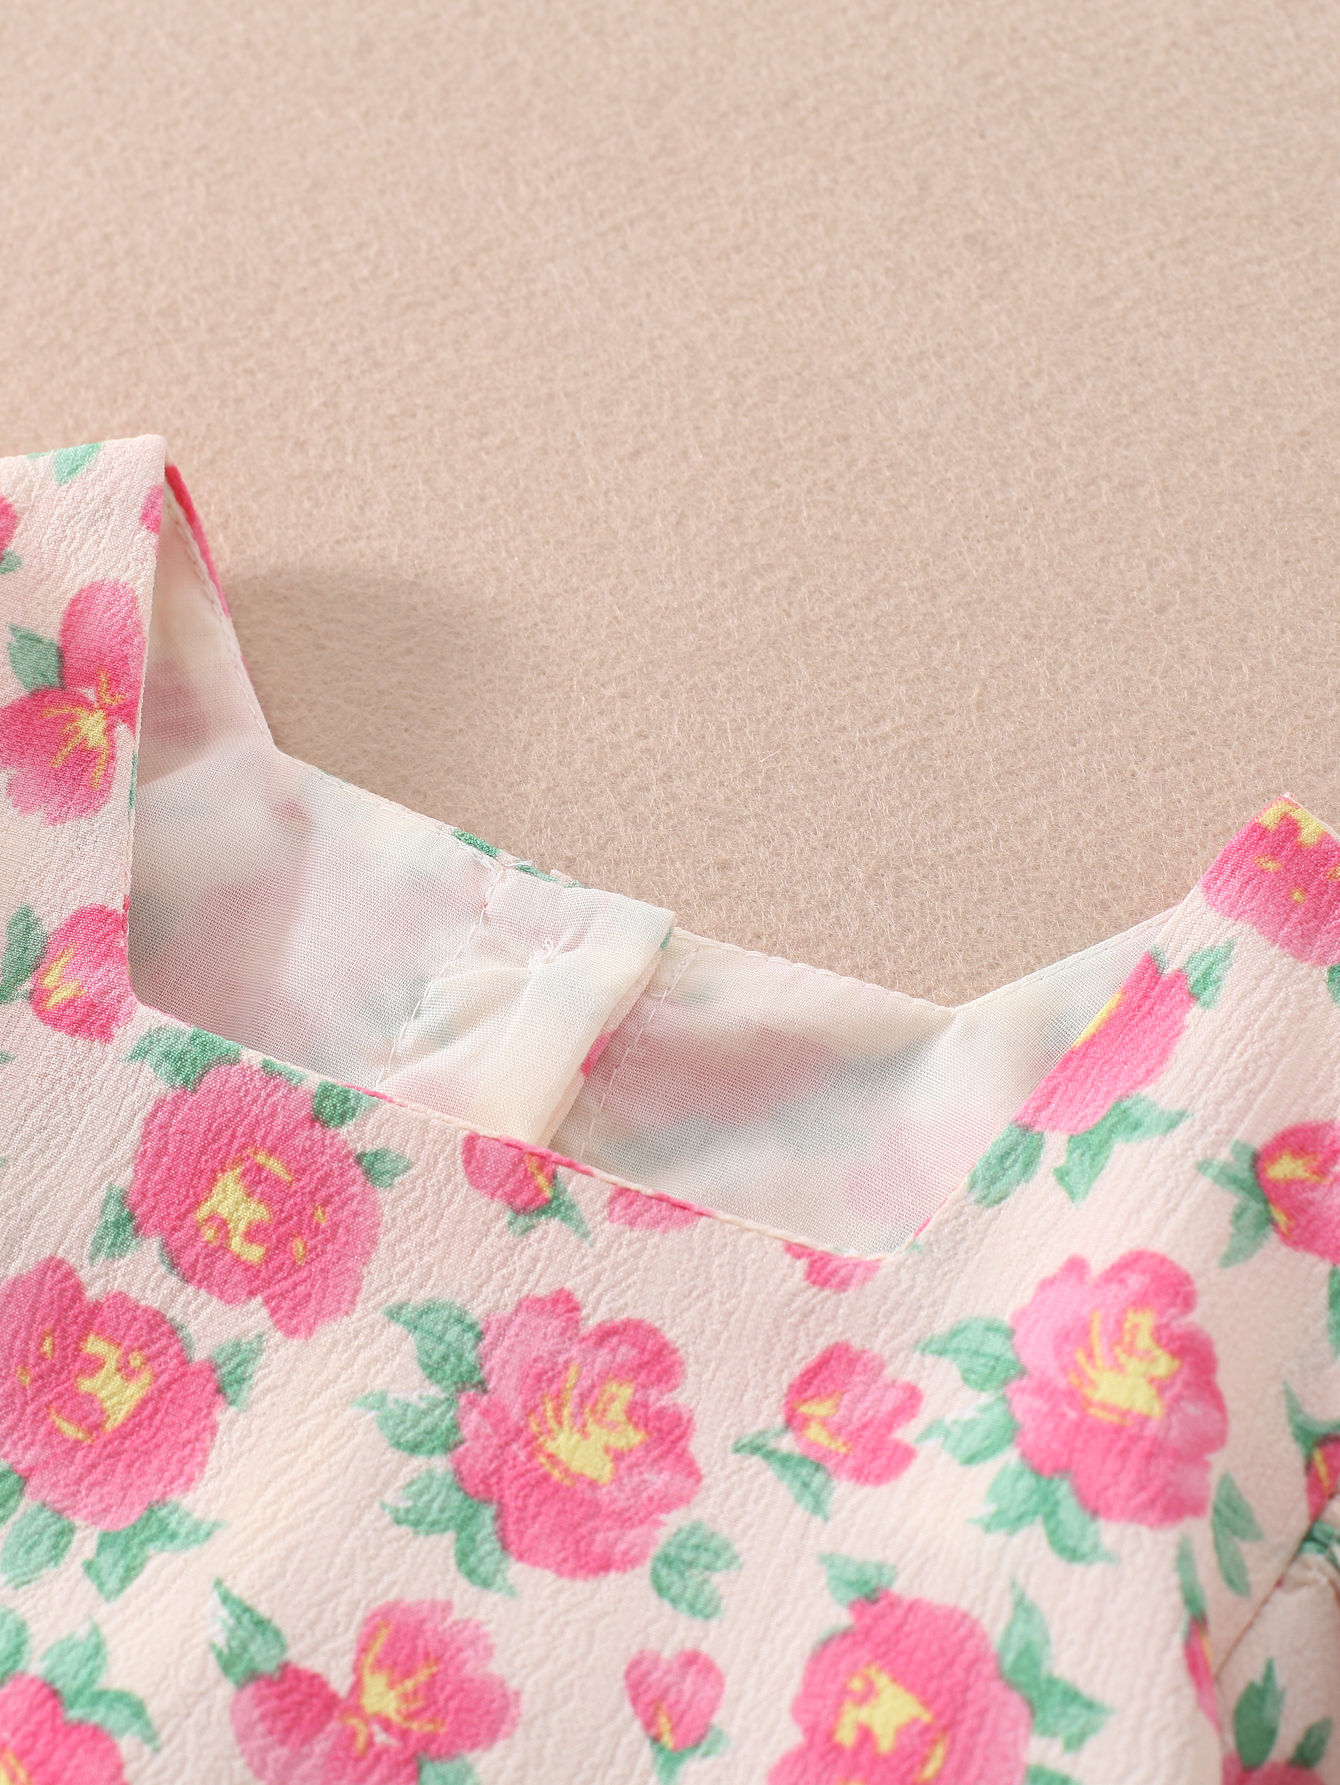 pink floral mesh dresses Toddler Girl Dresses kids cloths online store customization service